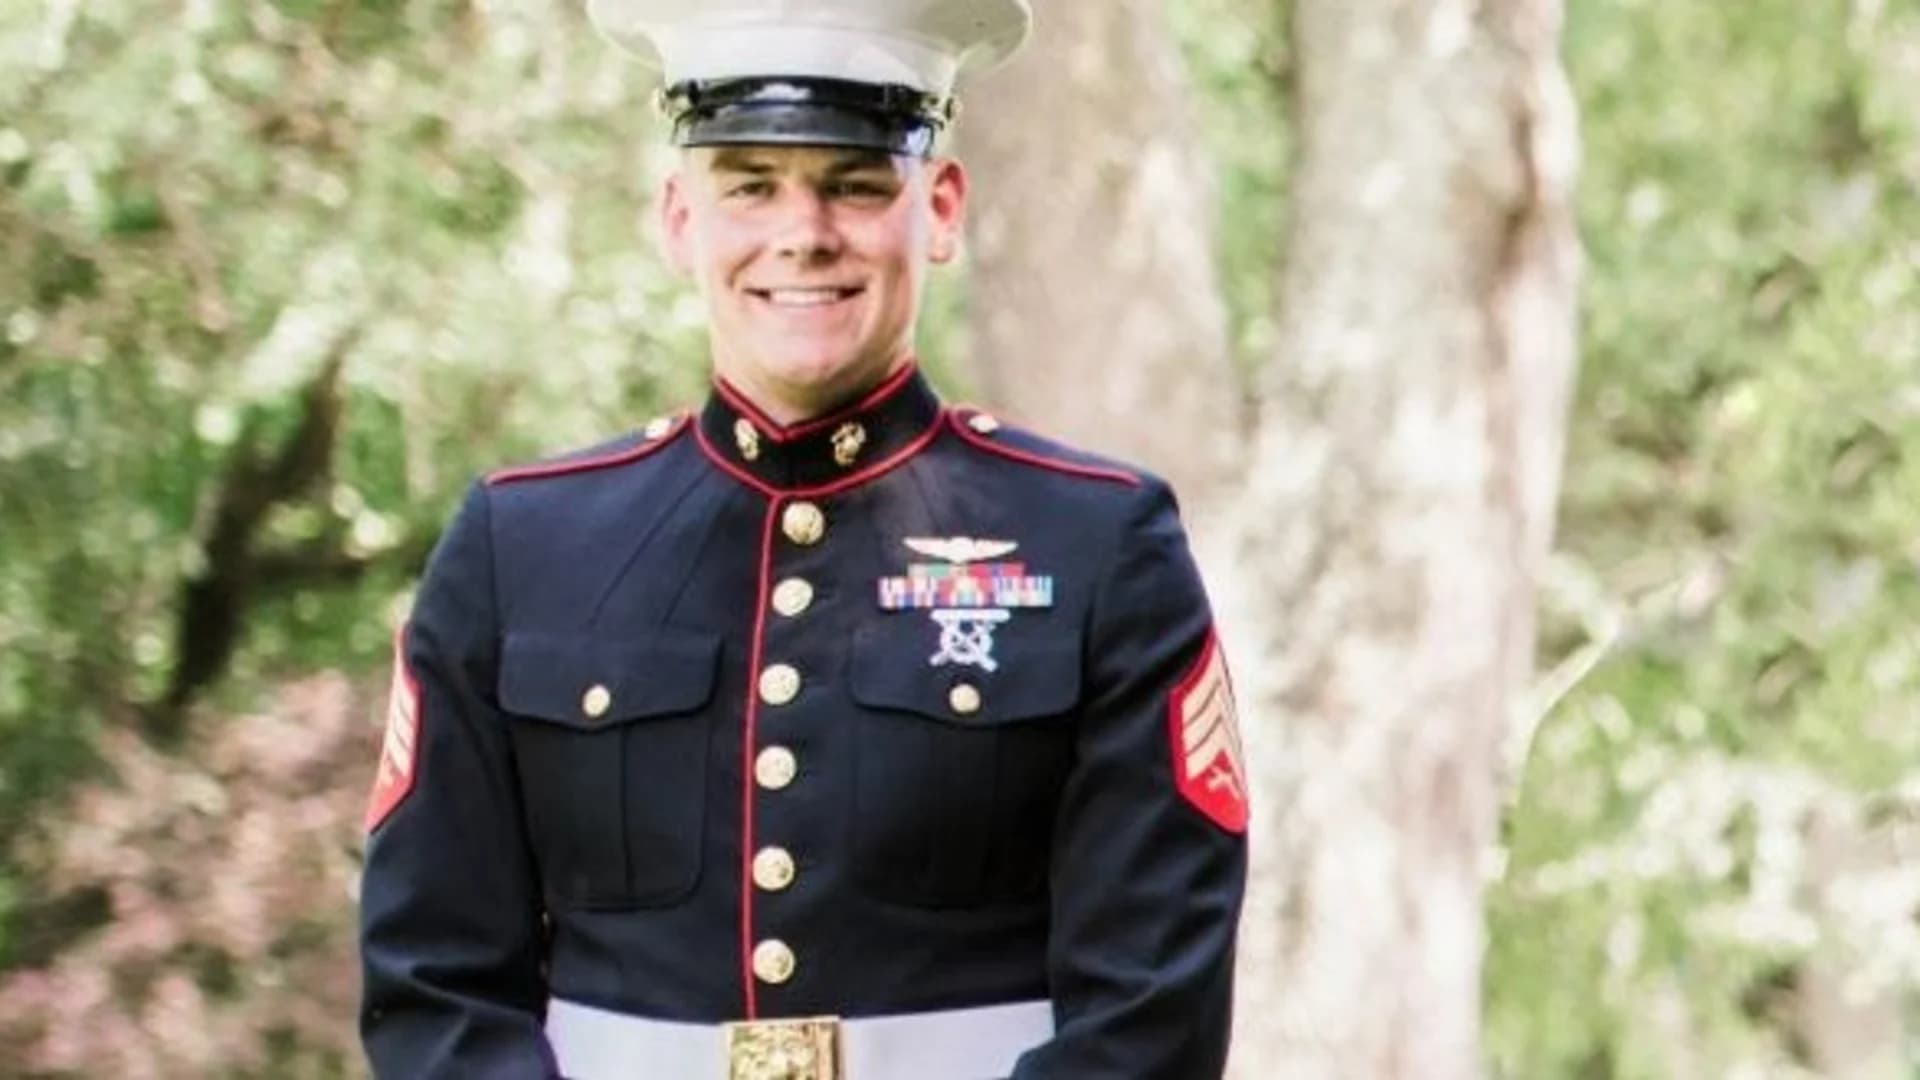 Funeral plans set fallen Marine